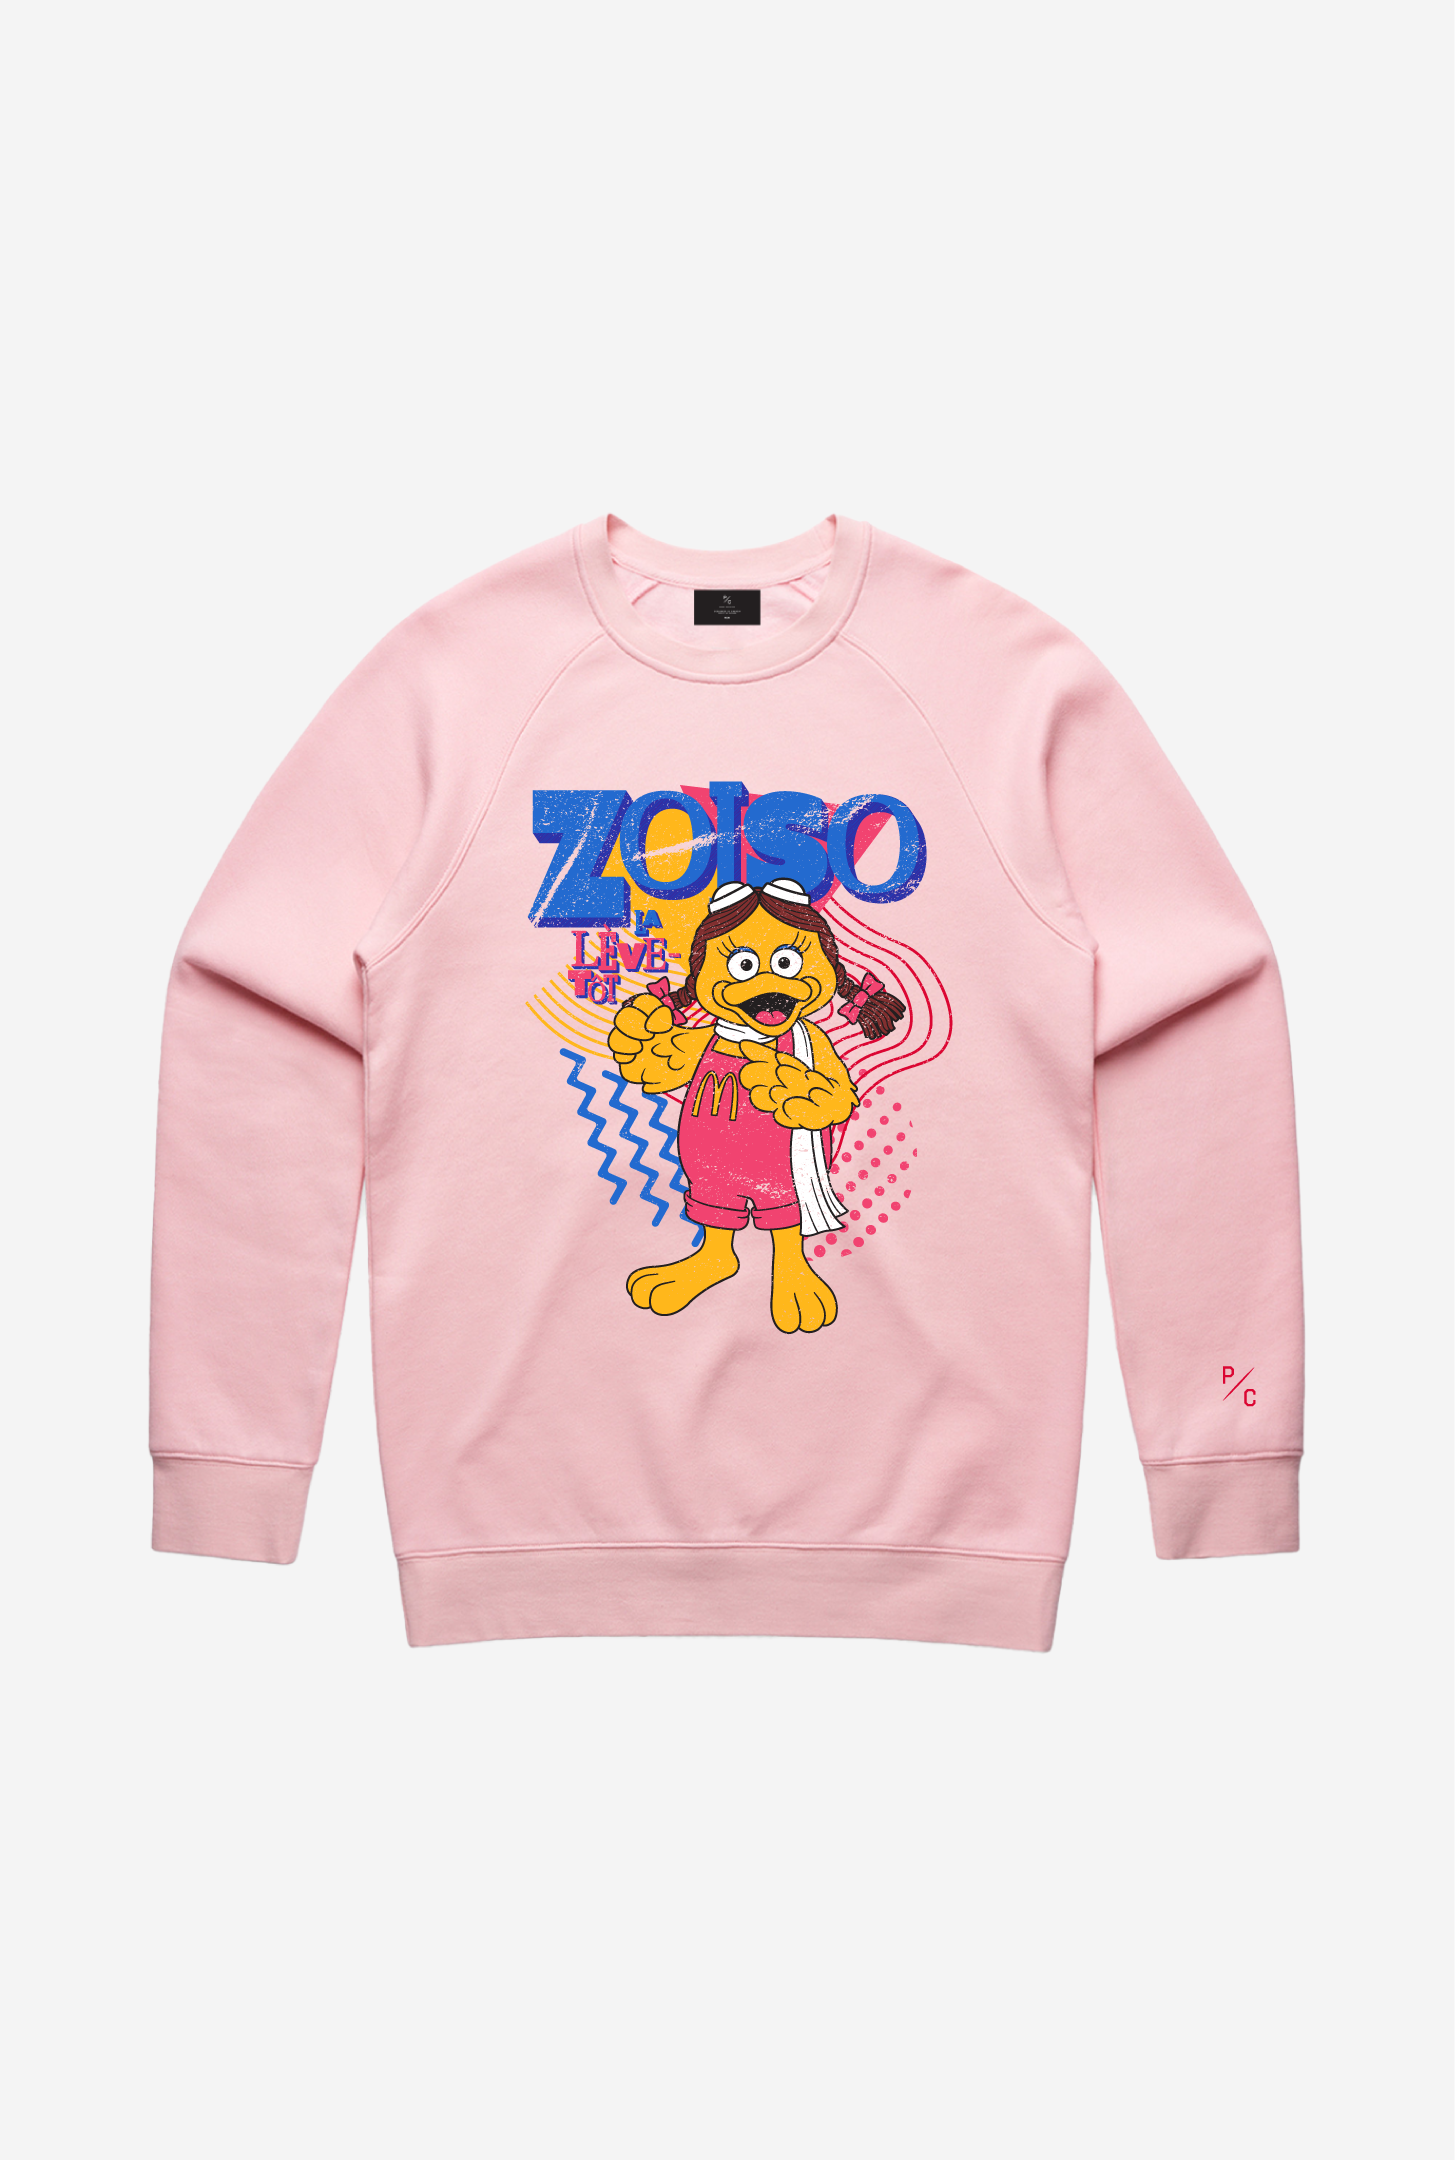 Vintage Zoiso Crewneck - Pink